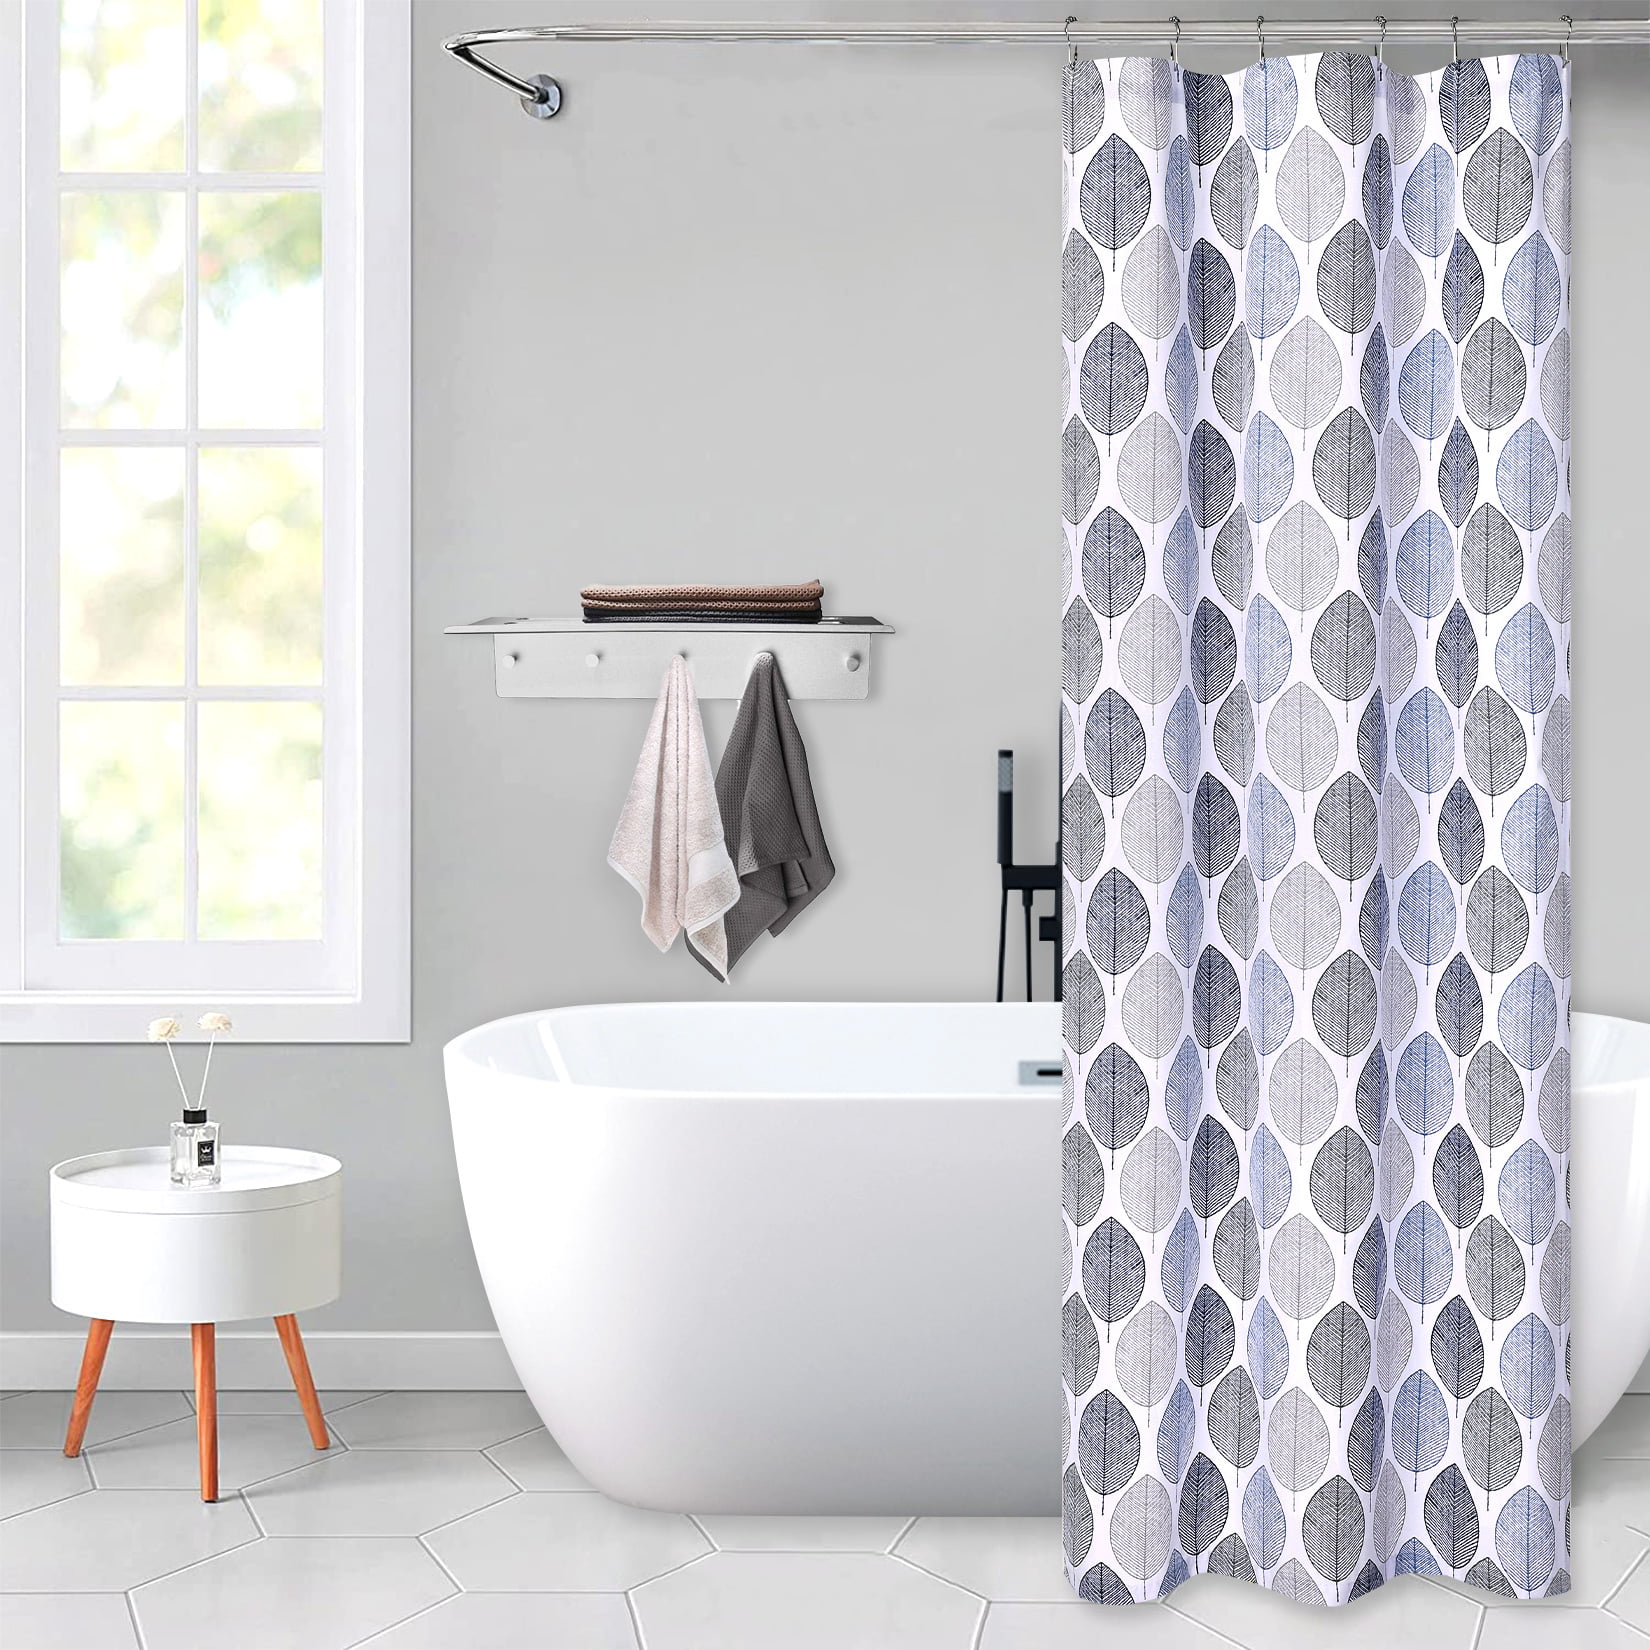 GlowSol Shower Curtain 72x72 Heavy Duty Thick Hotel Luxury Waterproof  Plaid Fabric Shower Curtain for Bathroom Washable, Gray, 1 Panel 